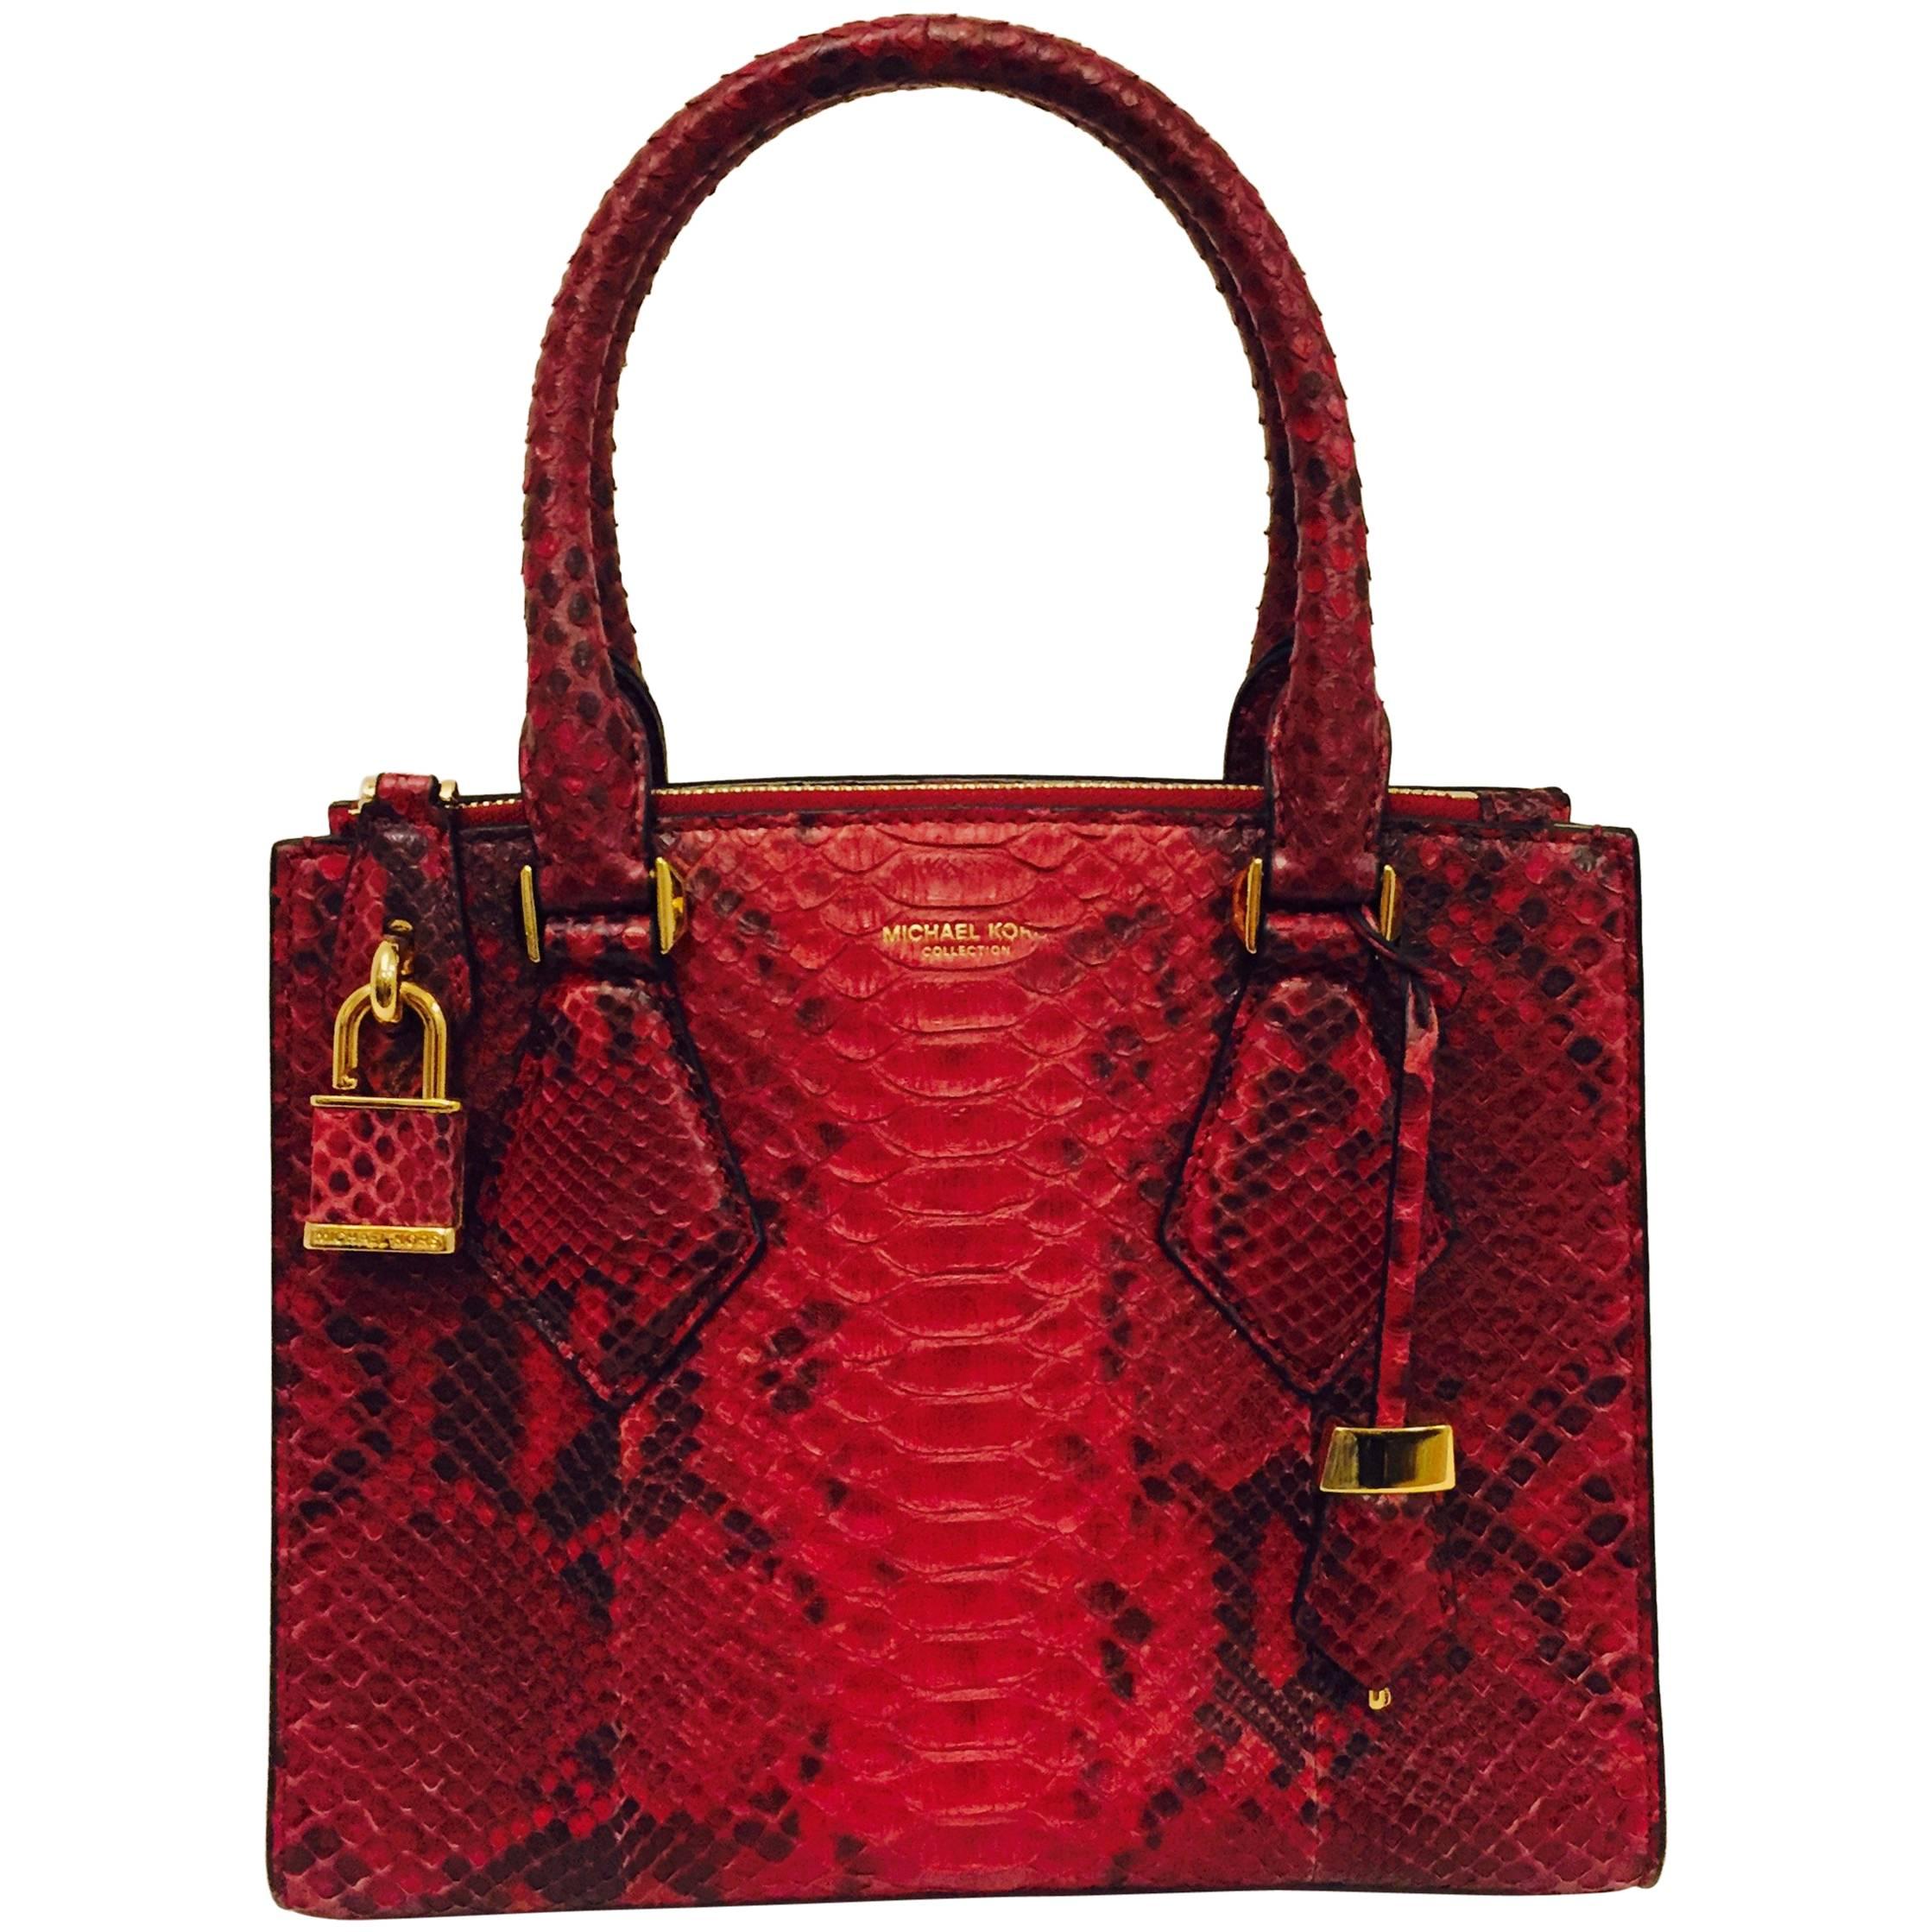 Marvelous Michael Kors Pink Python Casey Top Handle Structured Handbag